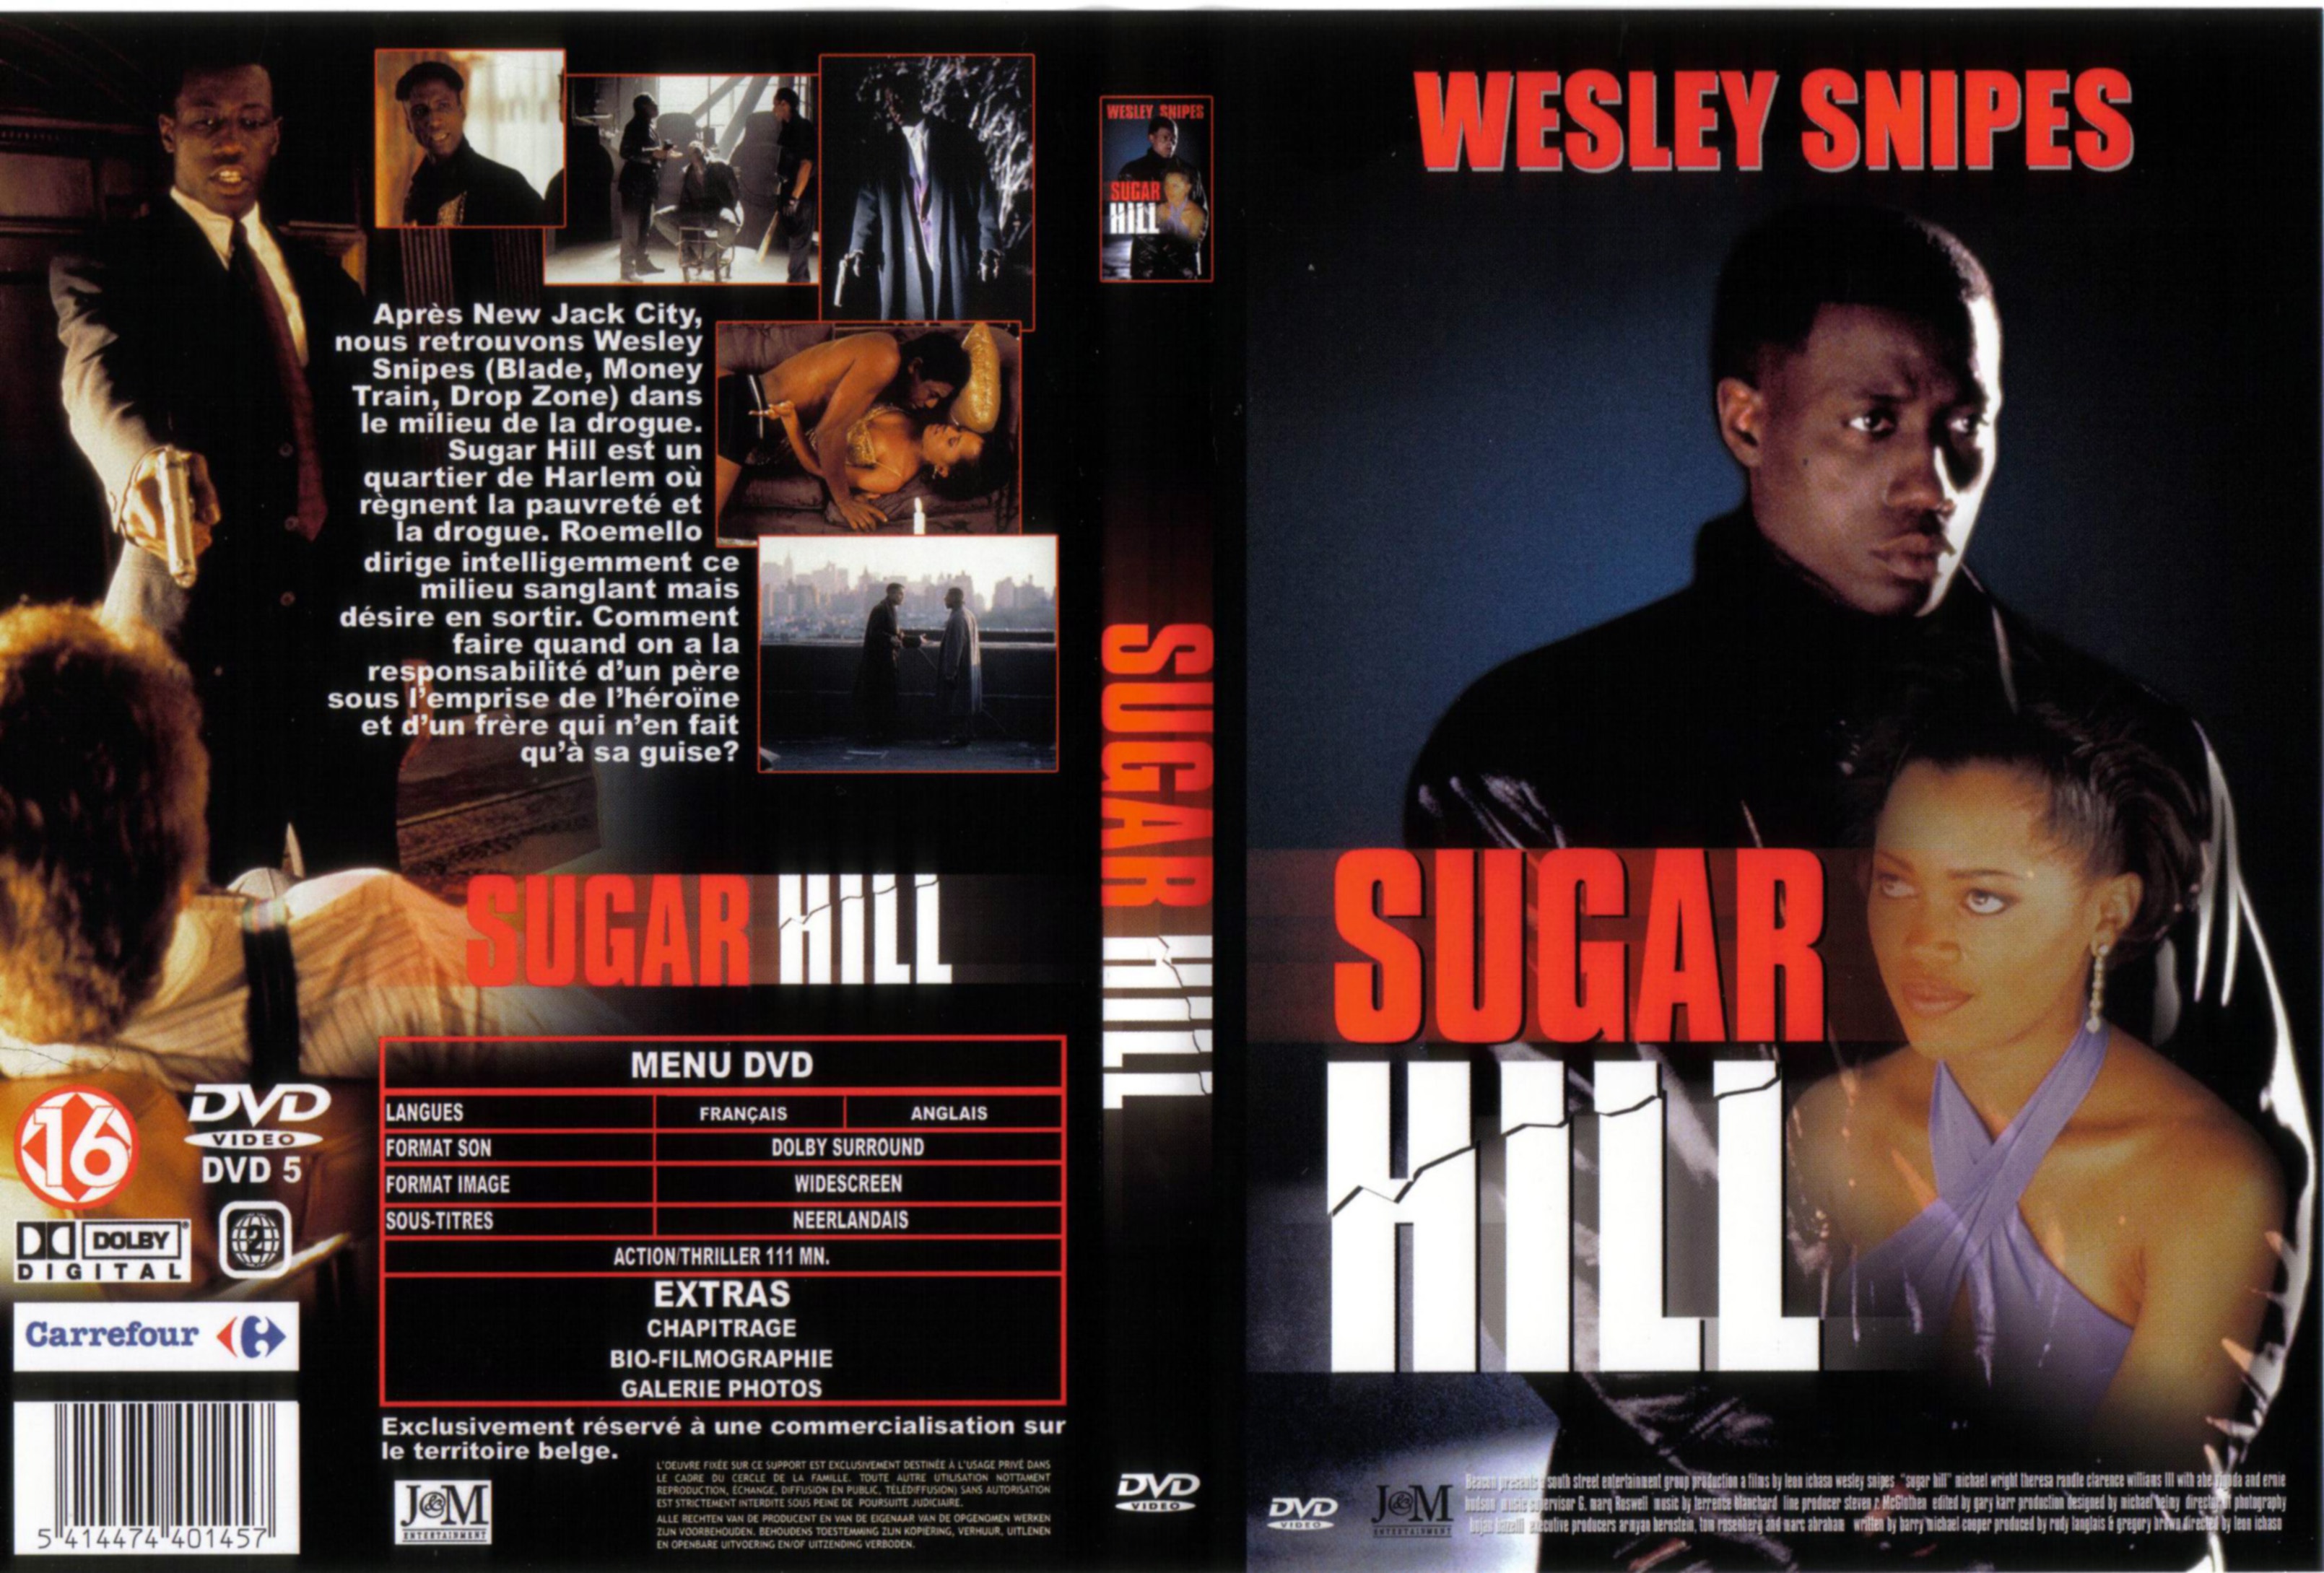 Jaquette DVD Sugar hill v2